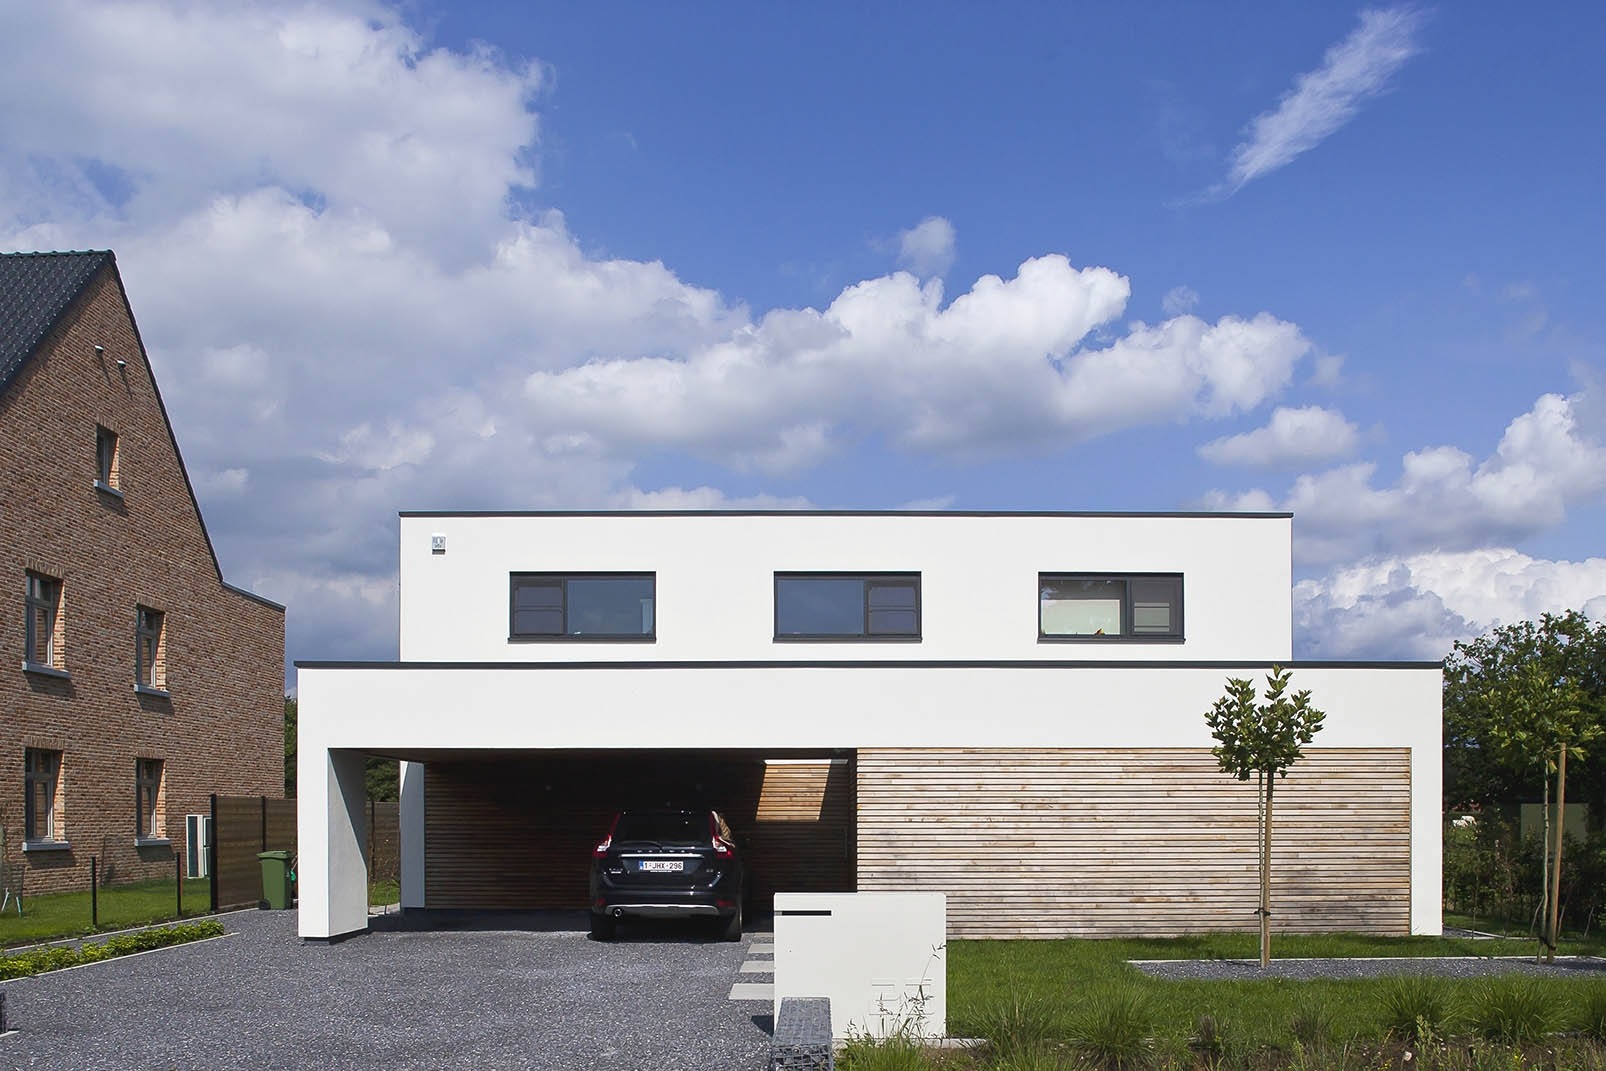 Moderne woning met carport en afgewerkt met witte crepi en houten gevelbekleding